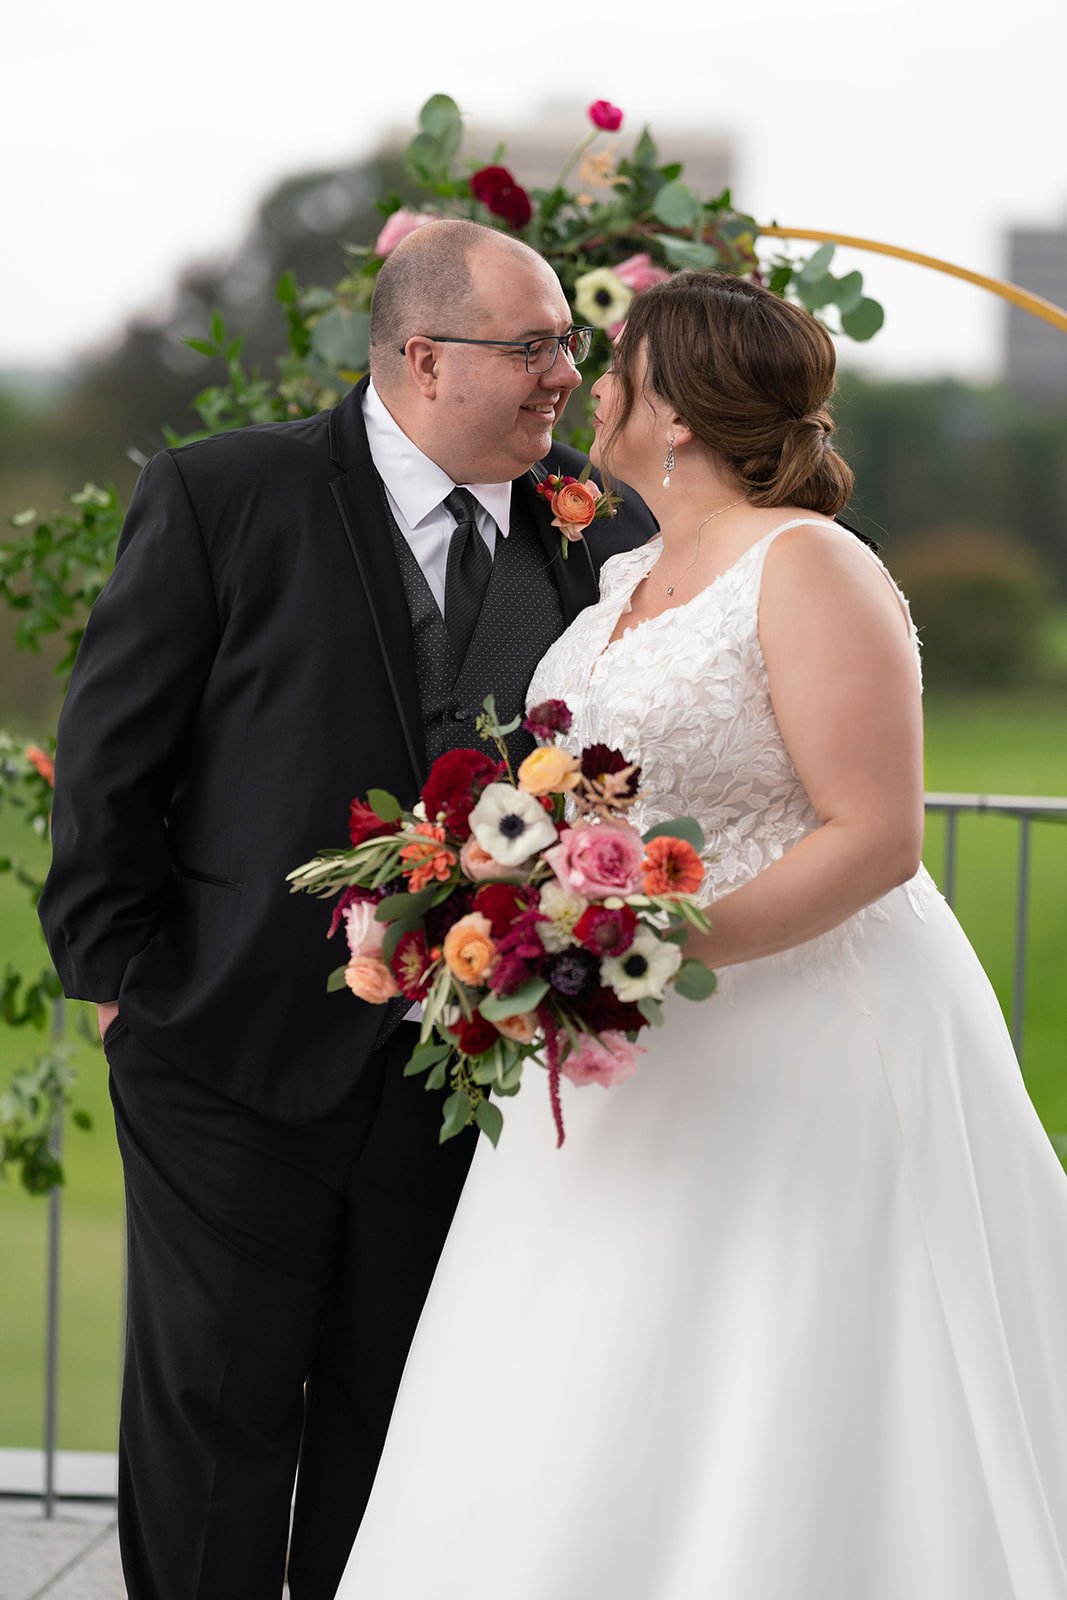 Jen and Bret - Minnesota Wedding Photography - Brookview Golf Club - RKH Images - Portraits (3 of 202).jpg